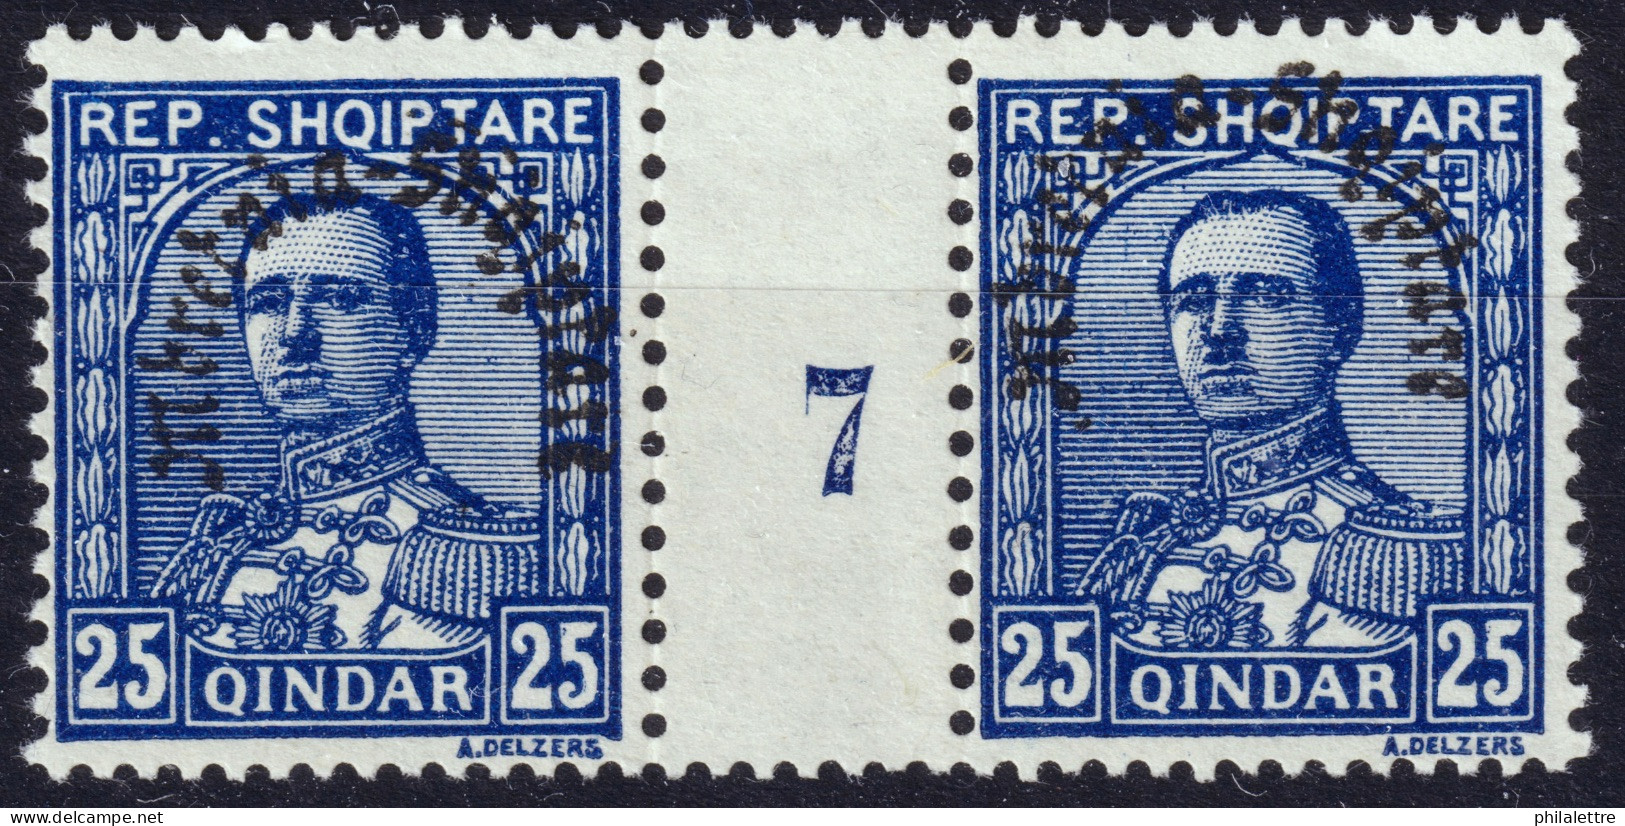 ALBANIE / ALBANIA - 1928 Mi.193 25Q. Bleu / Blue - Paire Millésime / Interpane Pair (7 For 1927) - No Gum / Sans Gomme - Albania